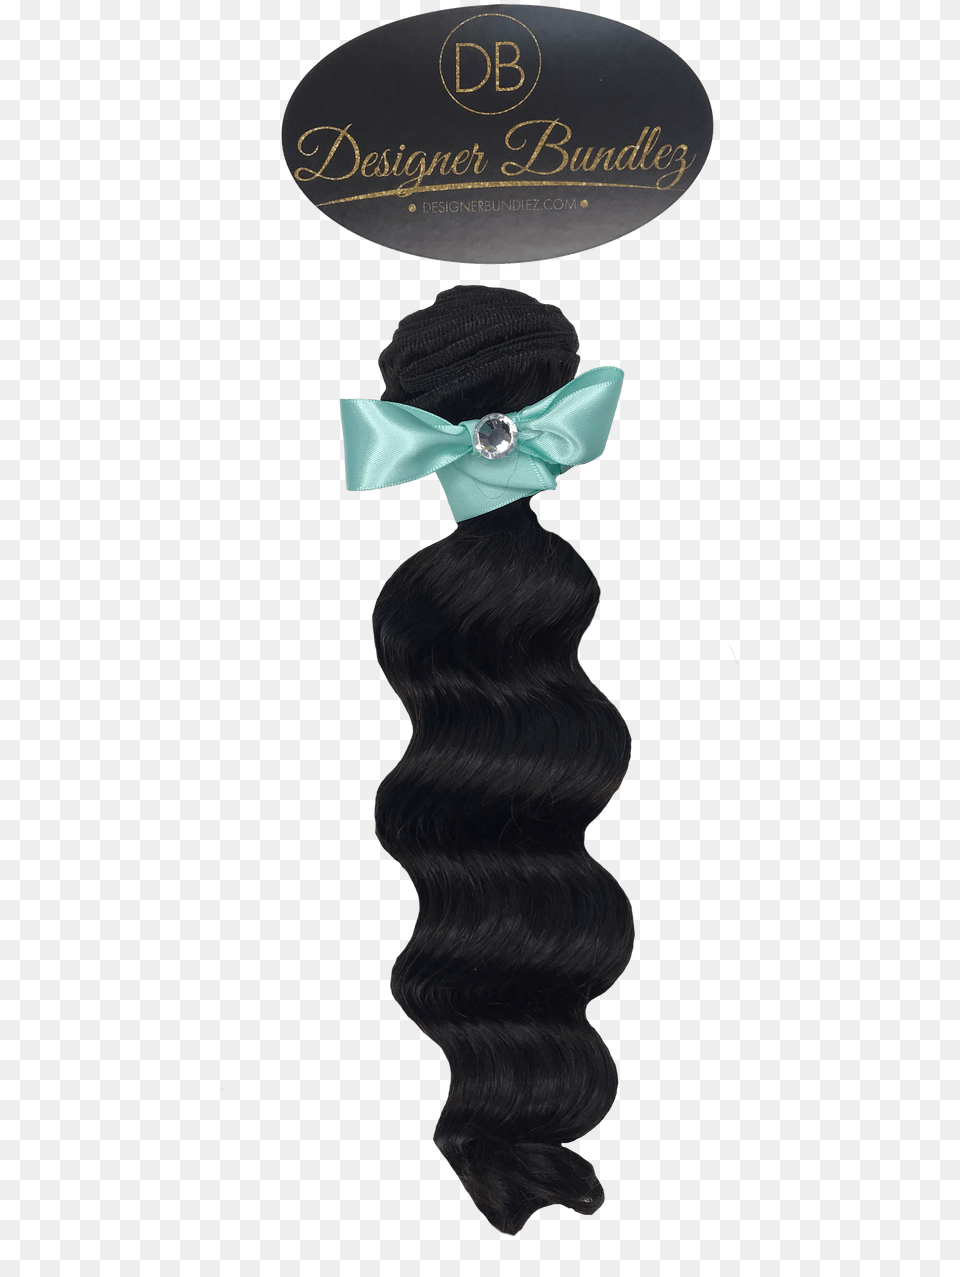 Designer Bundlez100 Human Hairvirgin Human Hairunprocessed Hair Bundles Cartoon Transparent, Accessories, Formal Wear, Tie, Baby Free Png